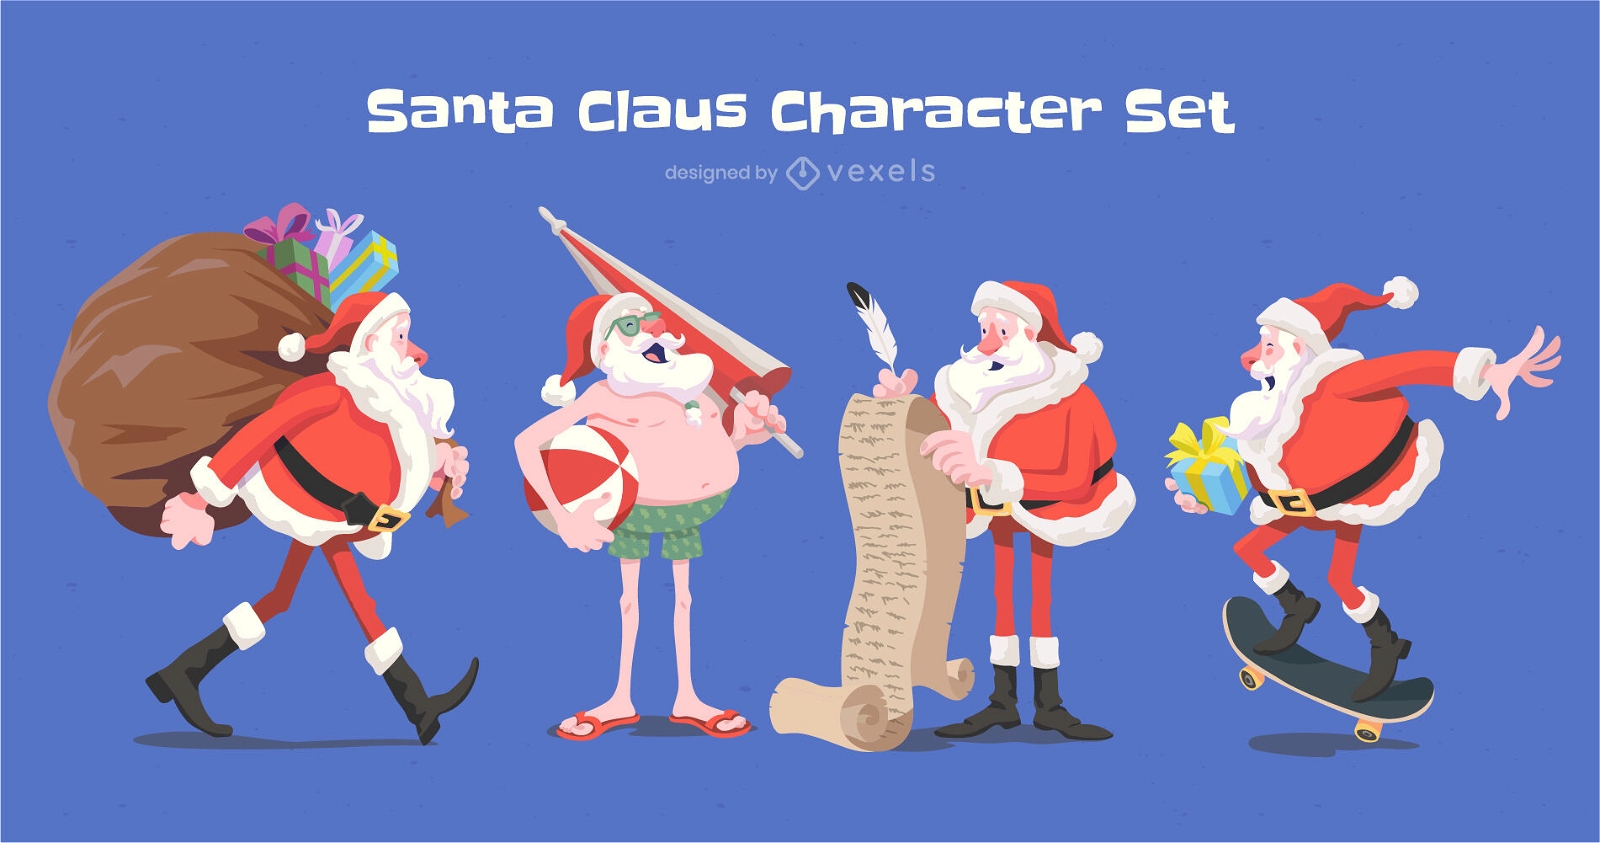 Santa claus activities character set